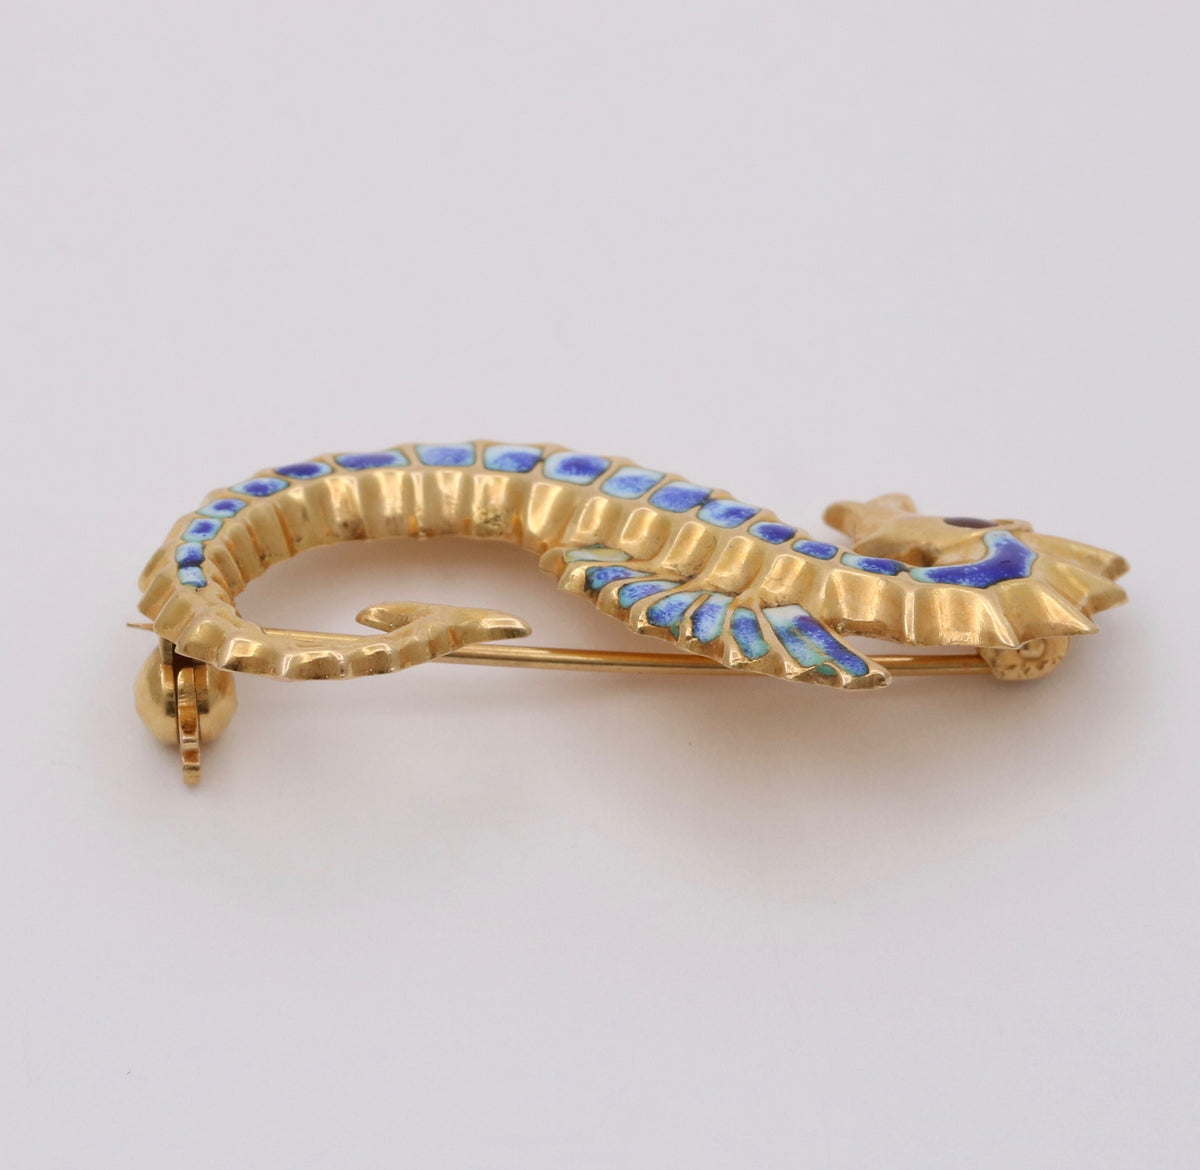 Vintage Enamel and 18K Gold Seahorse Pin